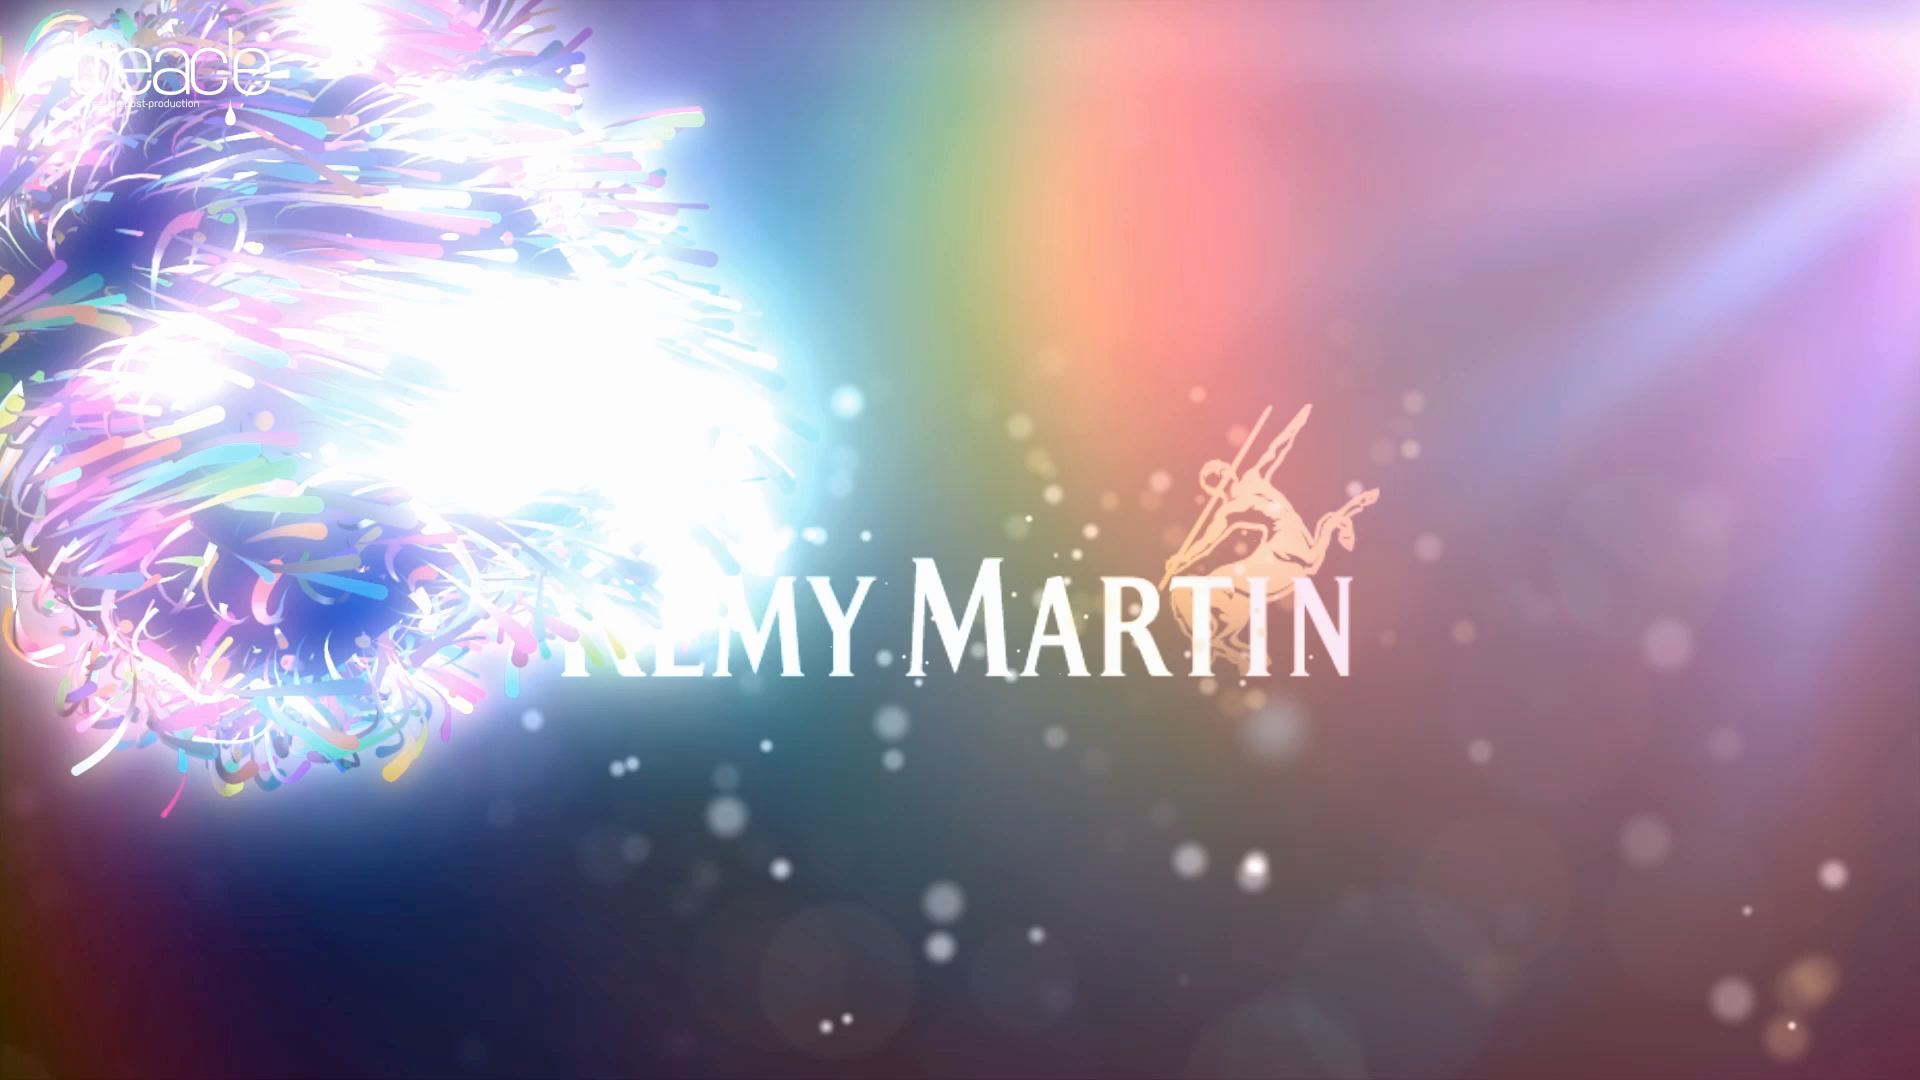 Animated Remy Martin logo